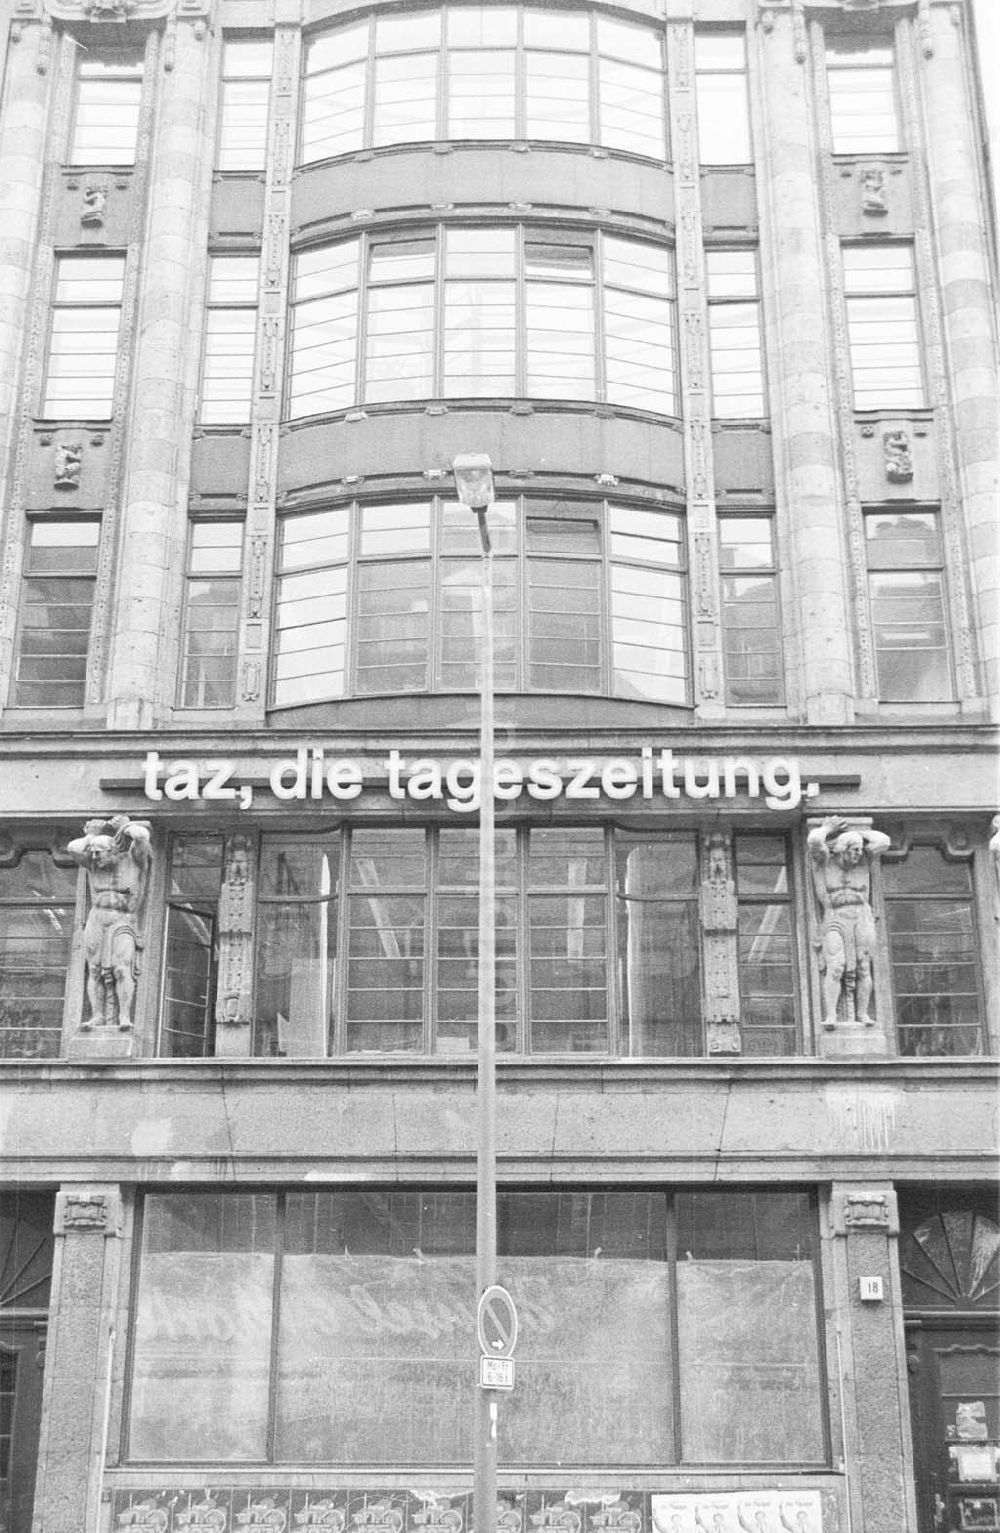 DDR-Bildarchiv: Berlin - taz-Redaktion Berlin-Kochstraße 14.03.1993